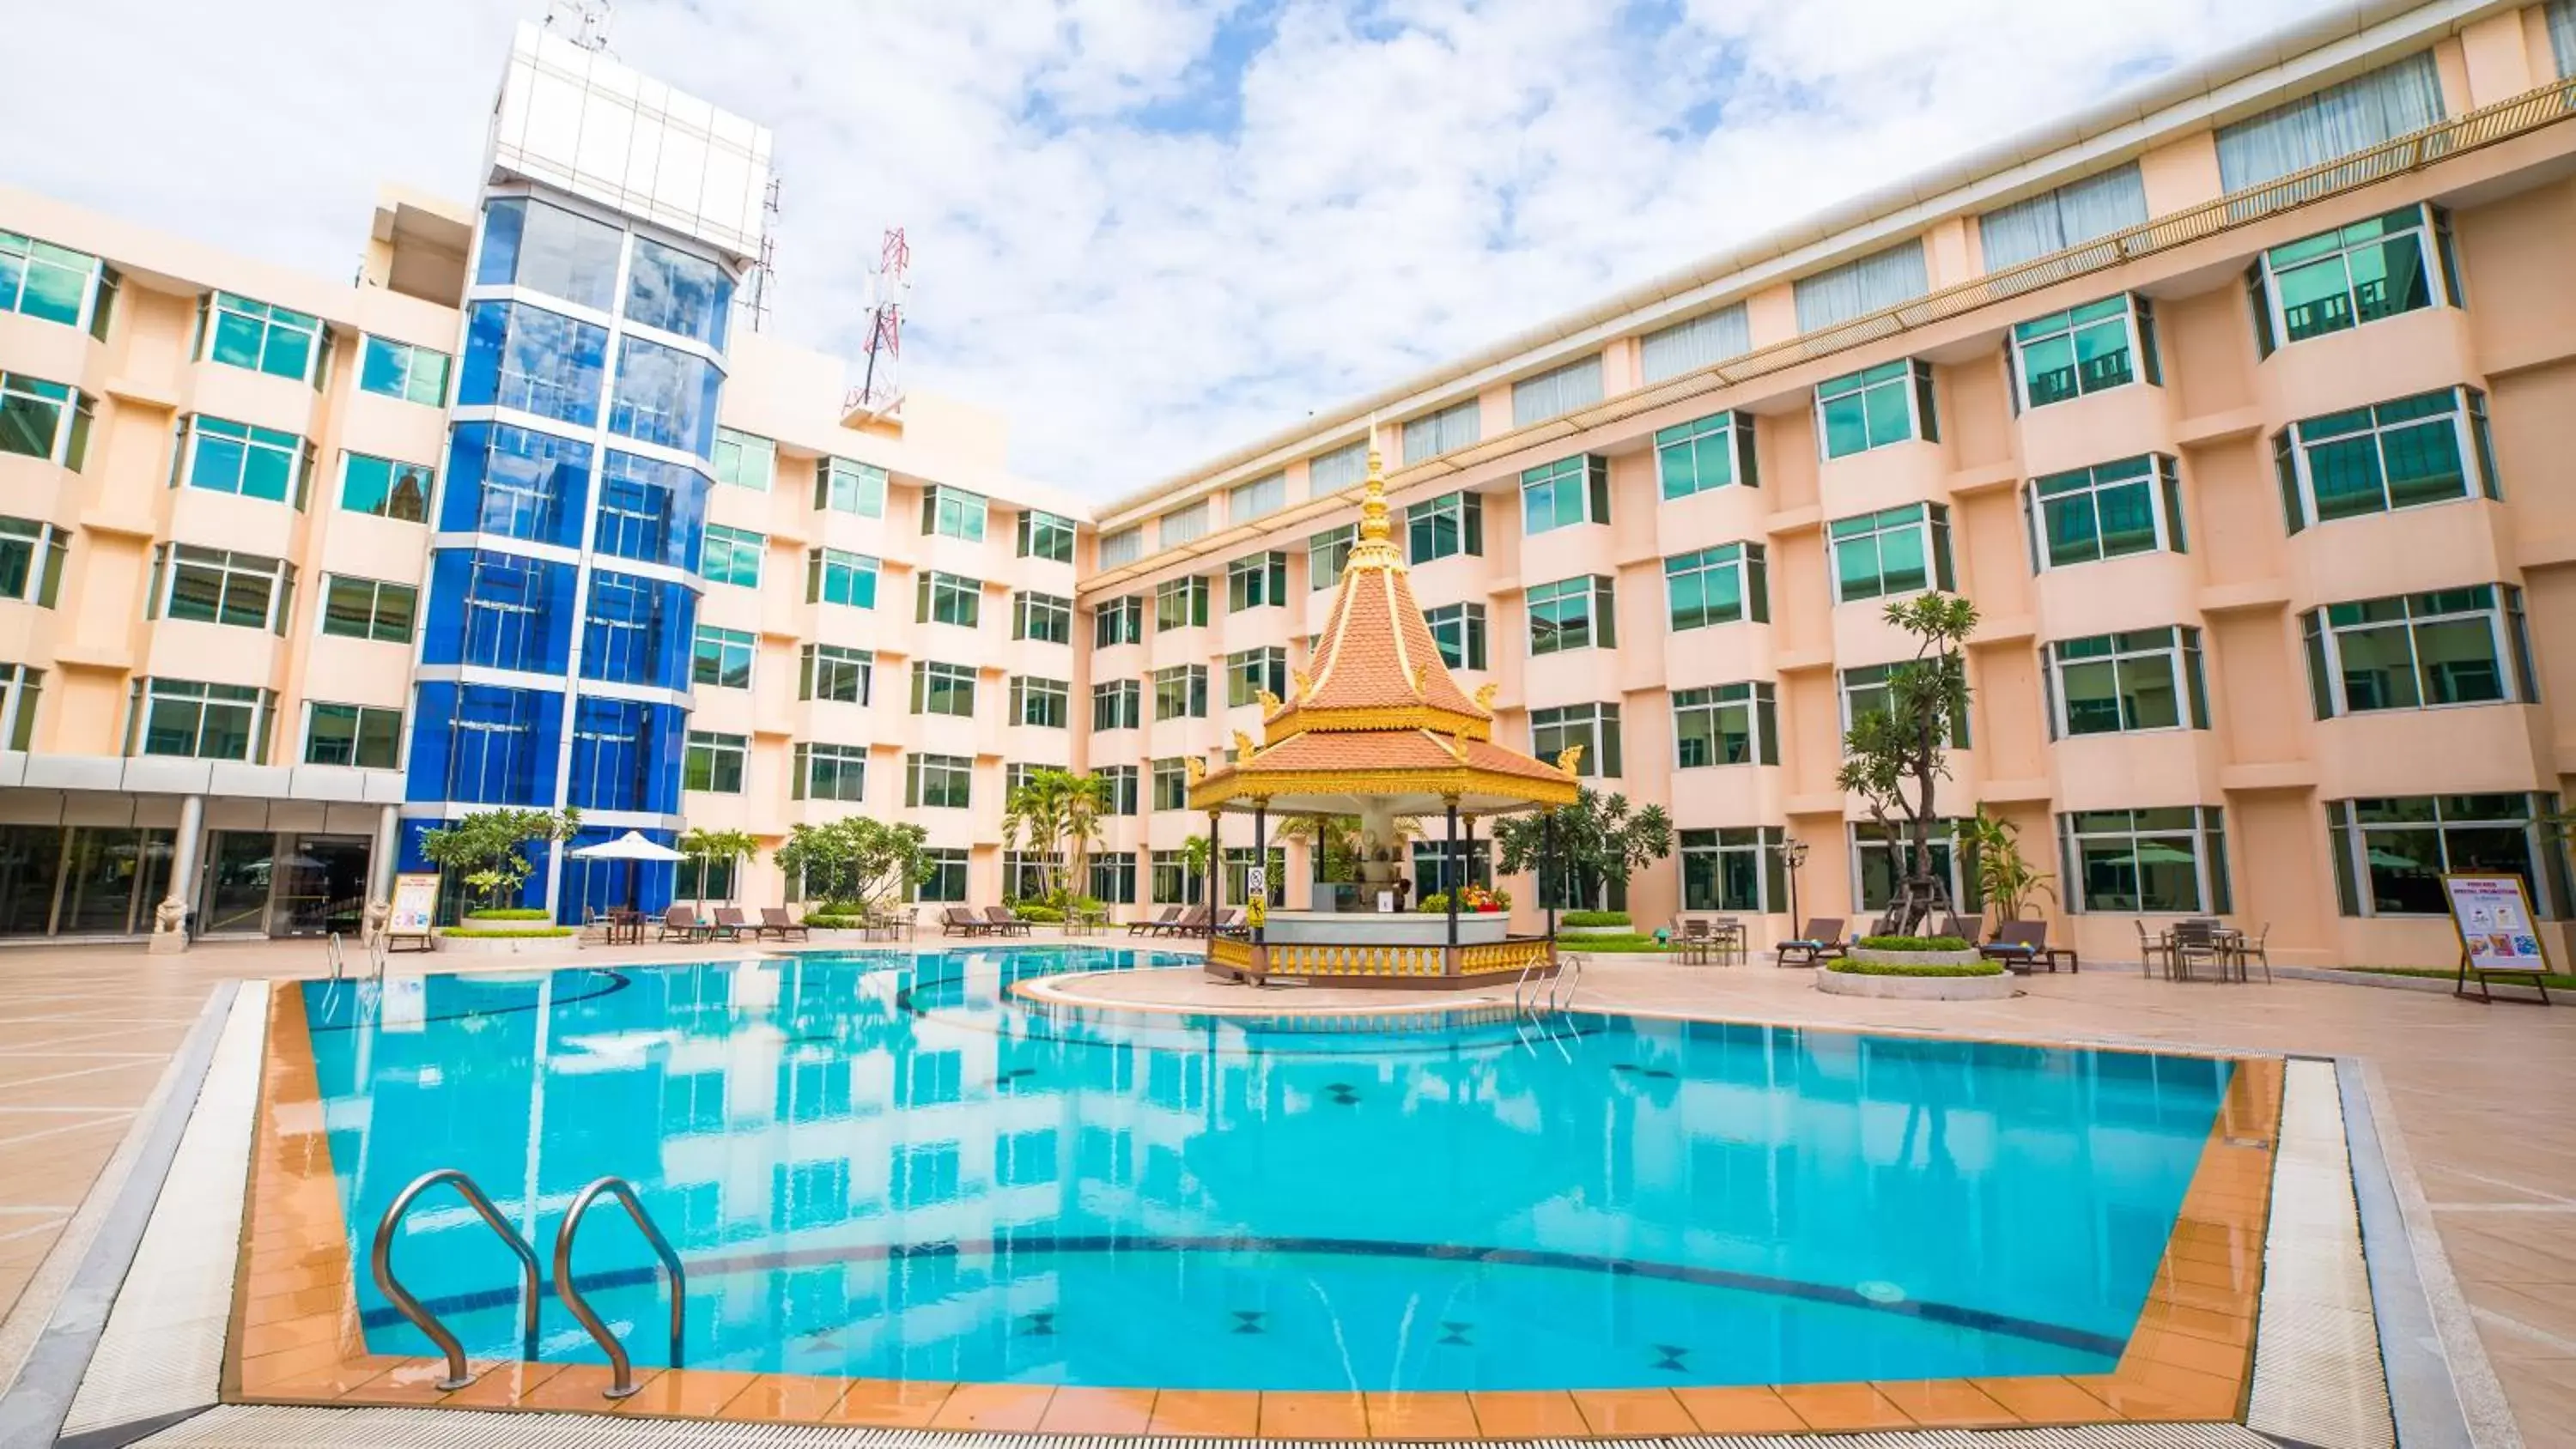 Swimming pool in Phnom Penh Hotel